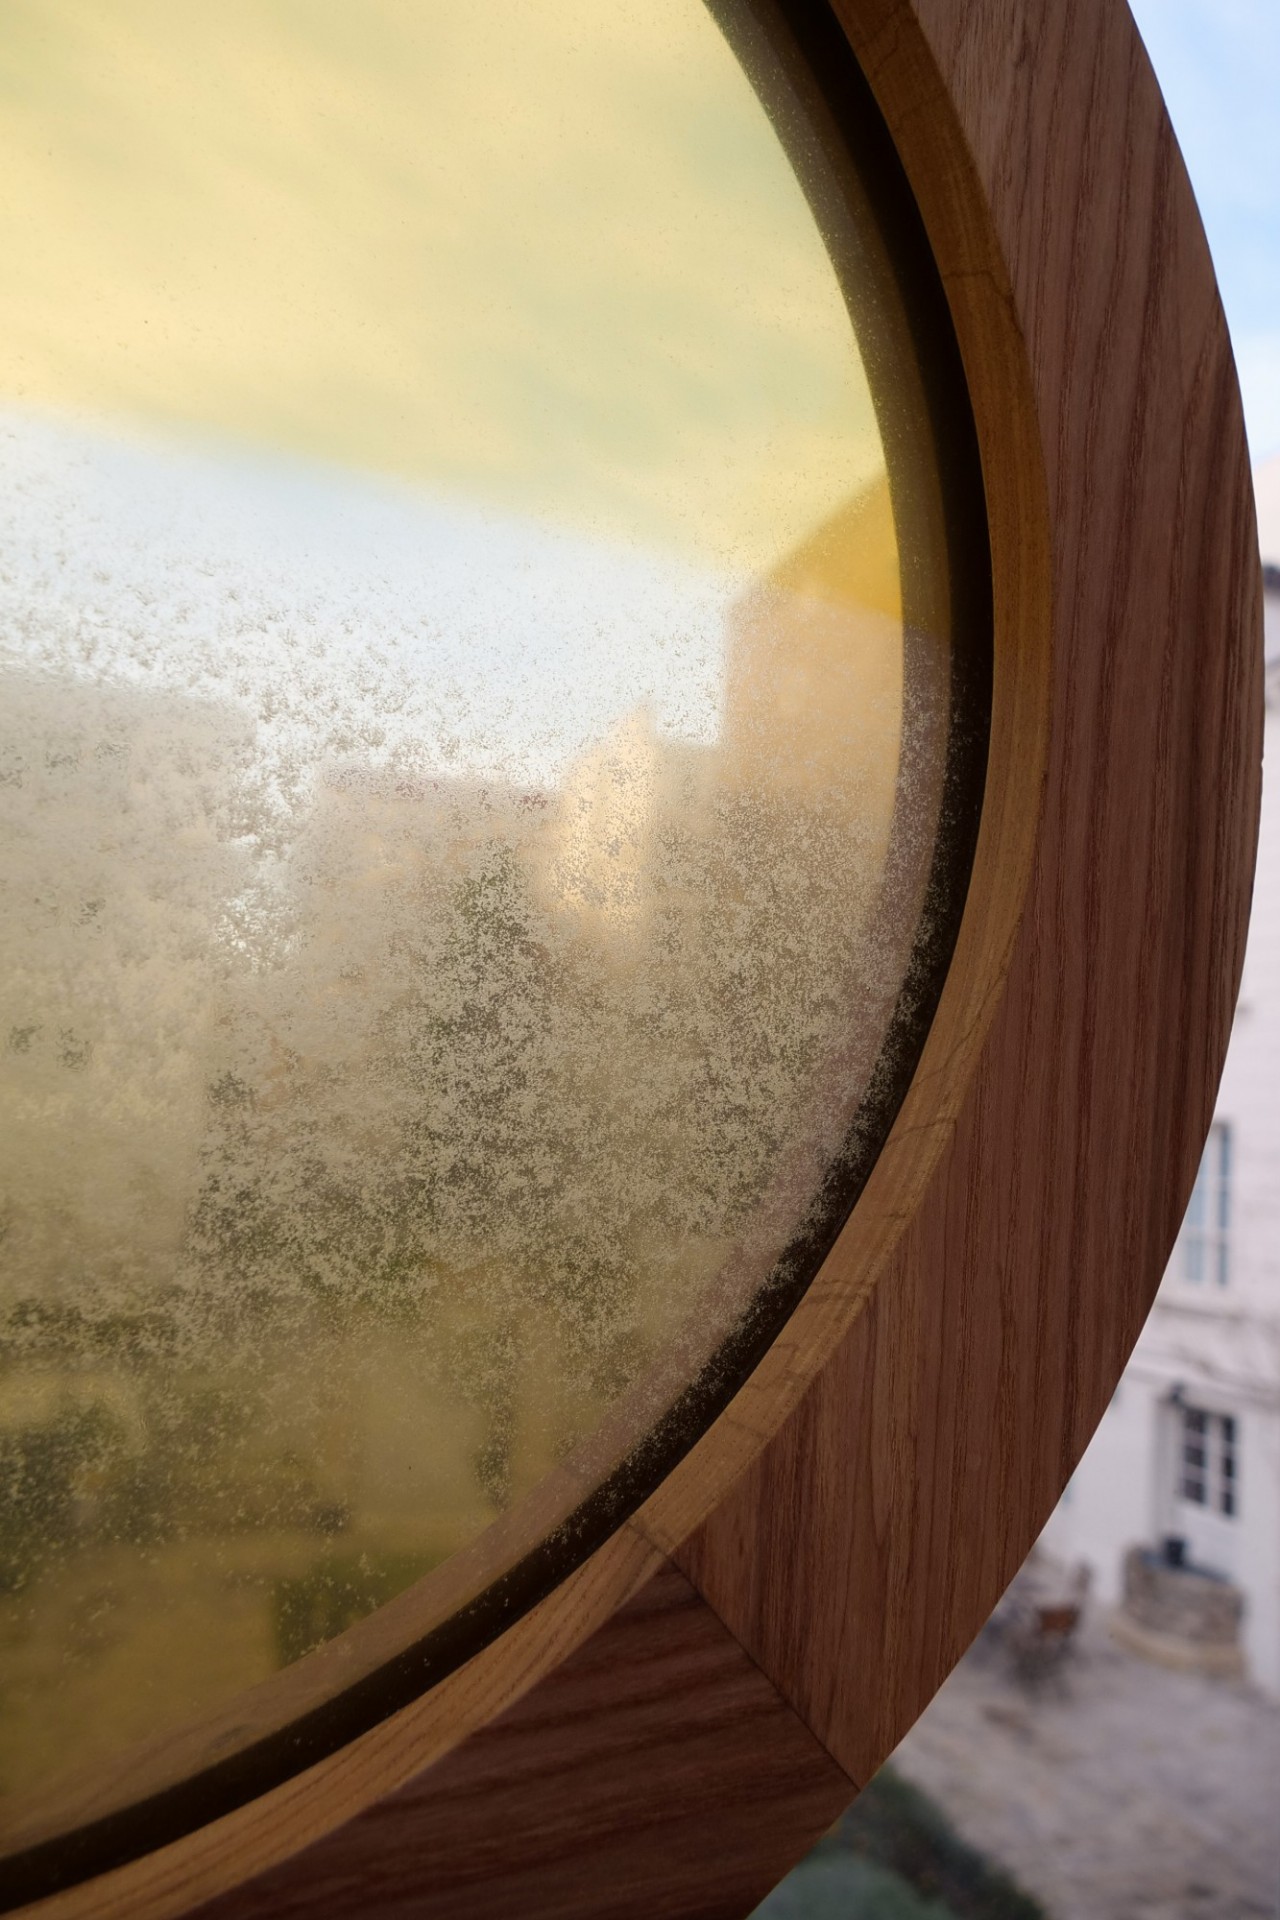 Details: The Honey Windows hanging in the glass veranda.